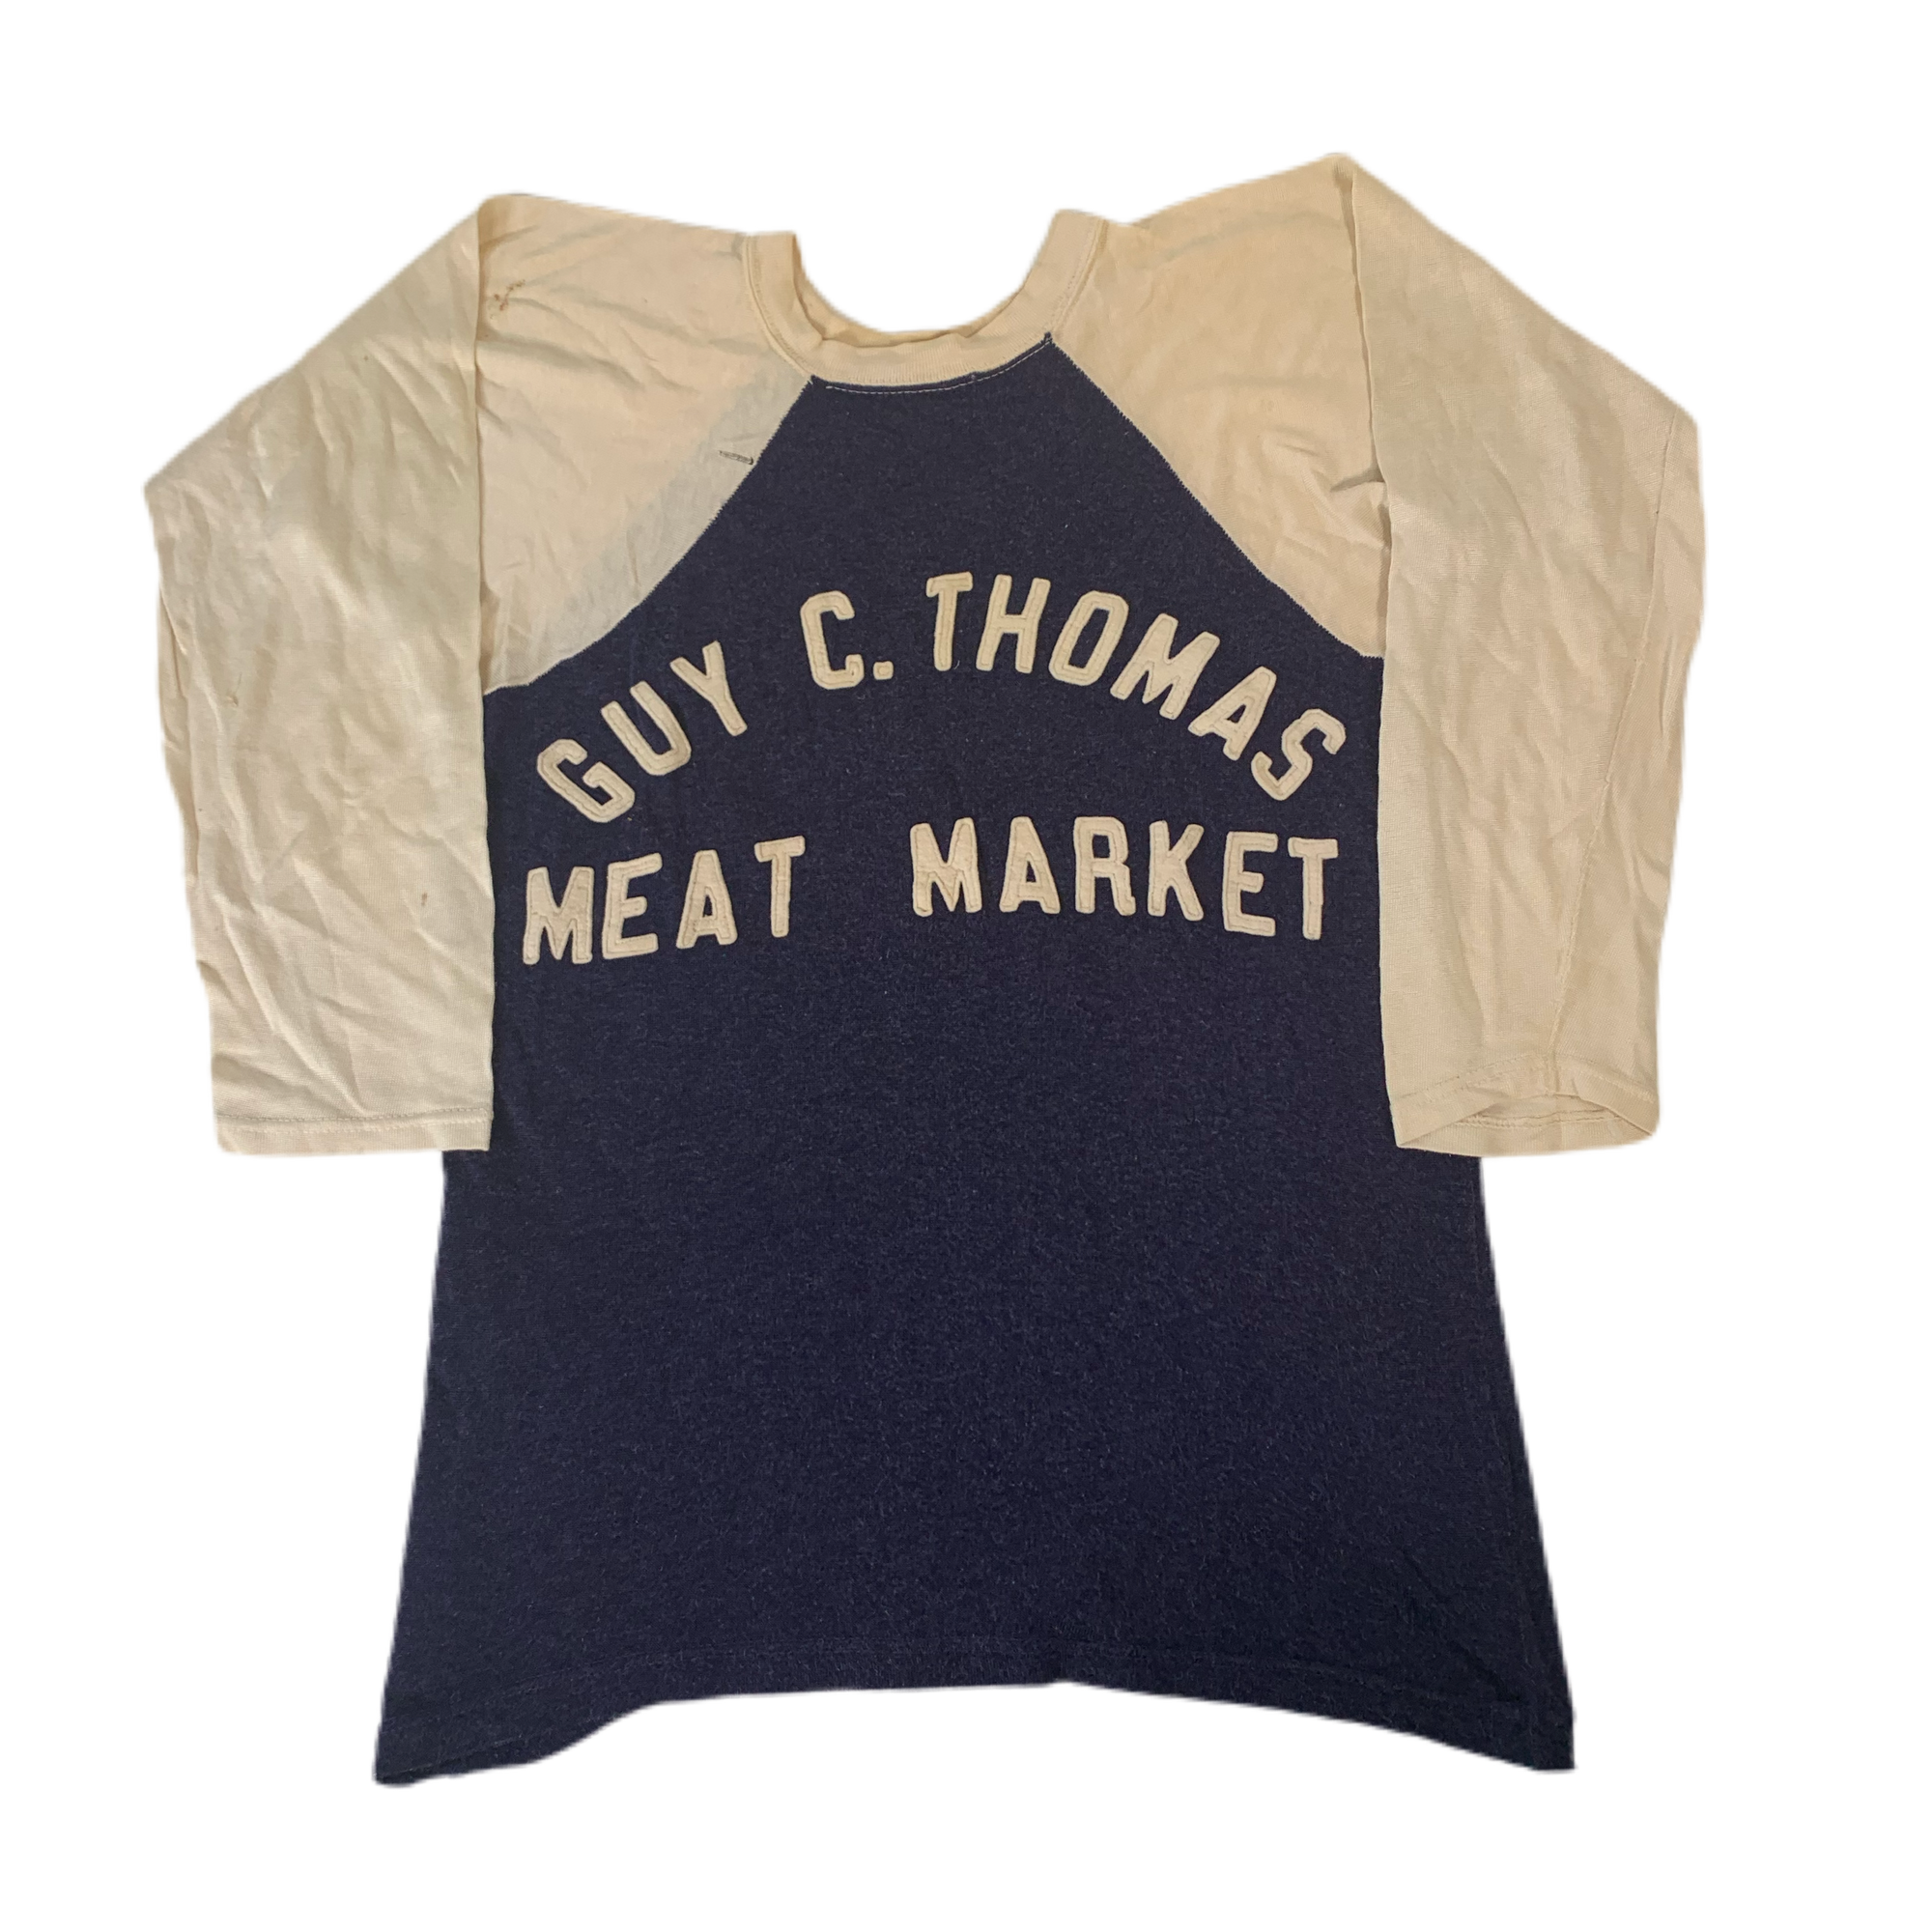 Vintage Guy C. Thomas “Meat Market” Baseball Jersey - jointcustodydc